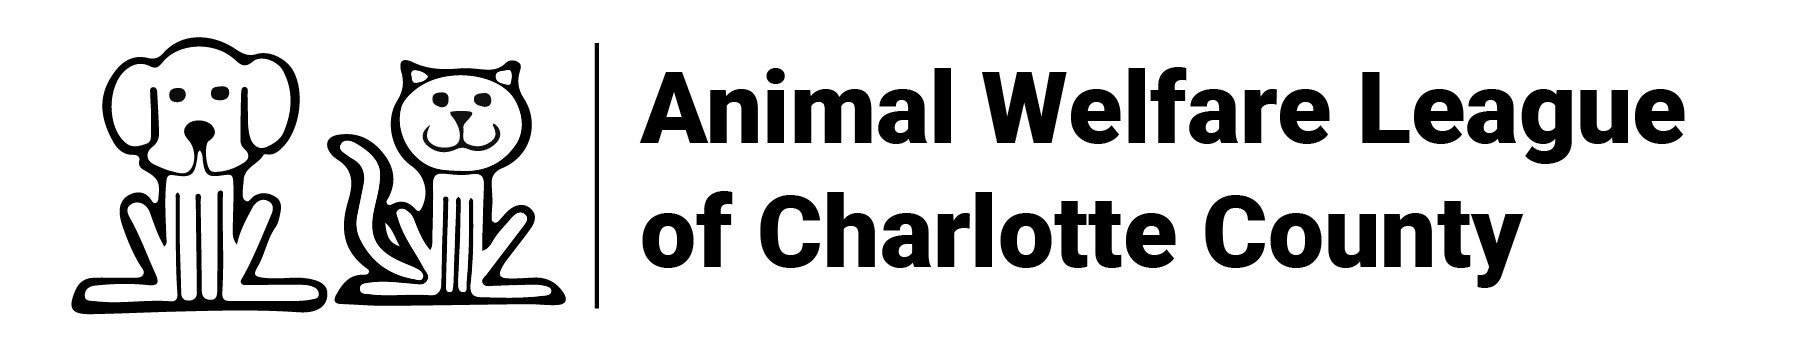 Animal Welfare League - Charlotte Community Foundation